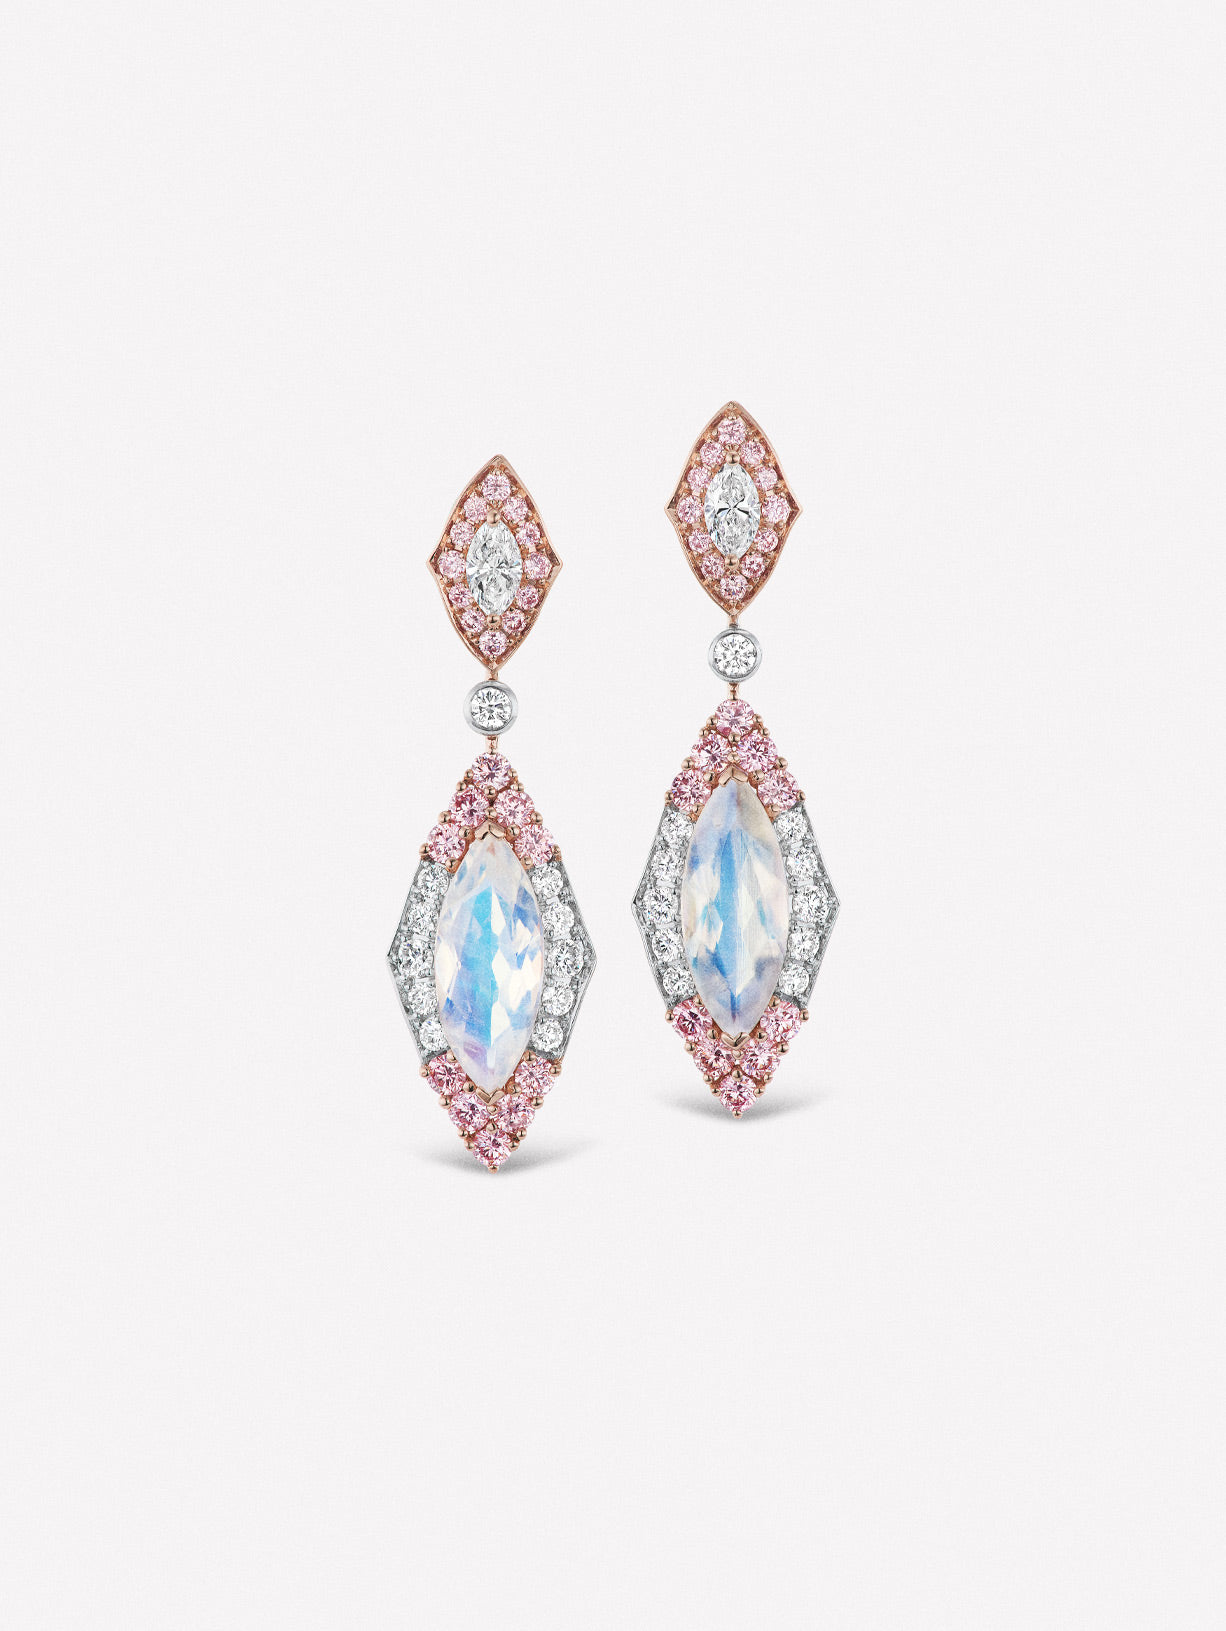 Argyle Pink™ Diamond and Moonstone Earrings - Pink Diamonds, J FINE - J Fine, Earrings - Pink Diamond Jewelry, argyle-pink™-diamond-and-moonstone-earrings-by-j-fine - Argyle Pink Diamonds